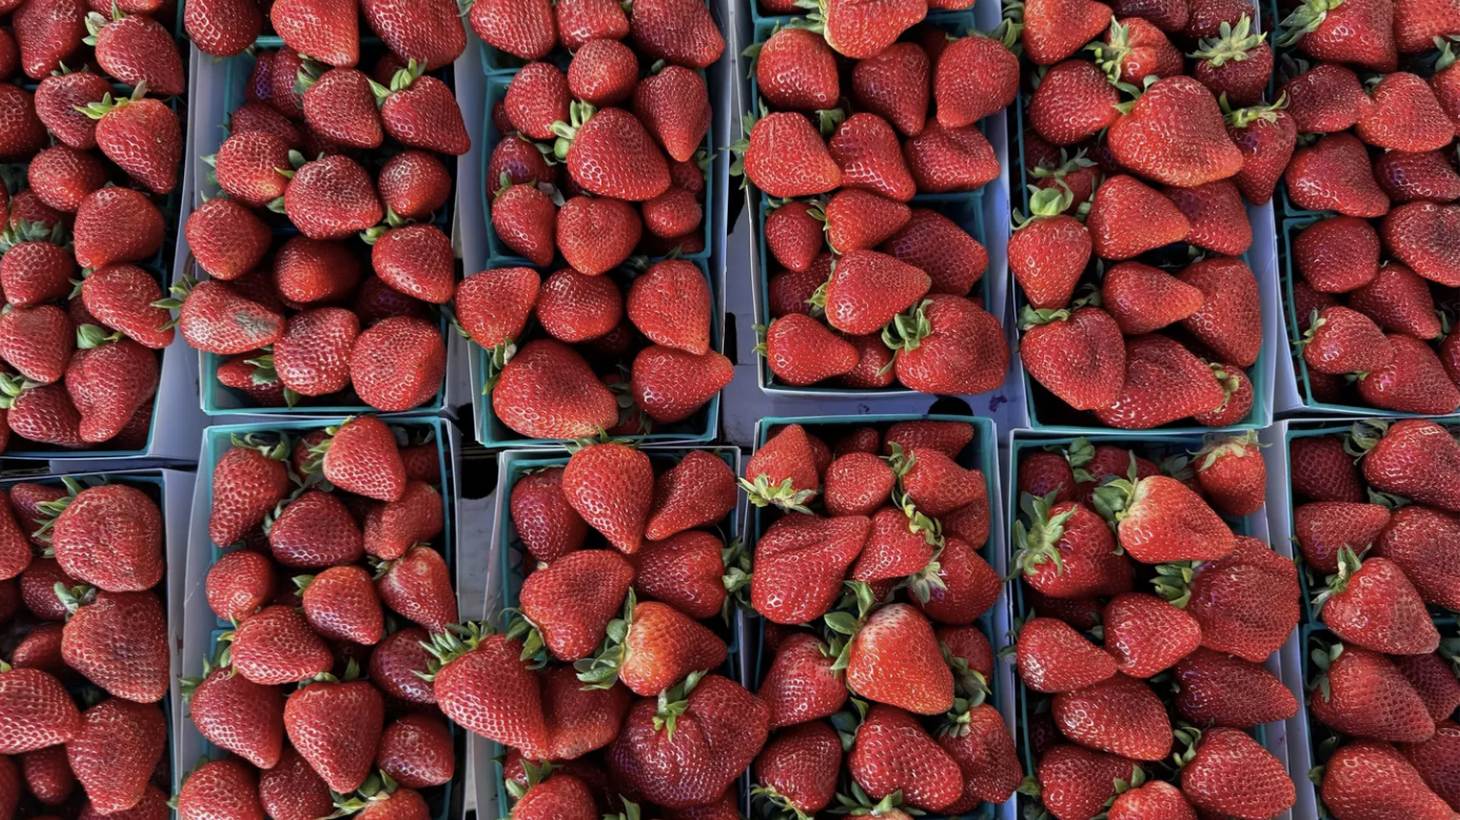 Gaviota strawberries from Tamai Family Farms are available at the Santa Monica Farmers Market.